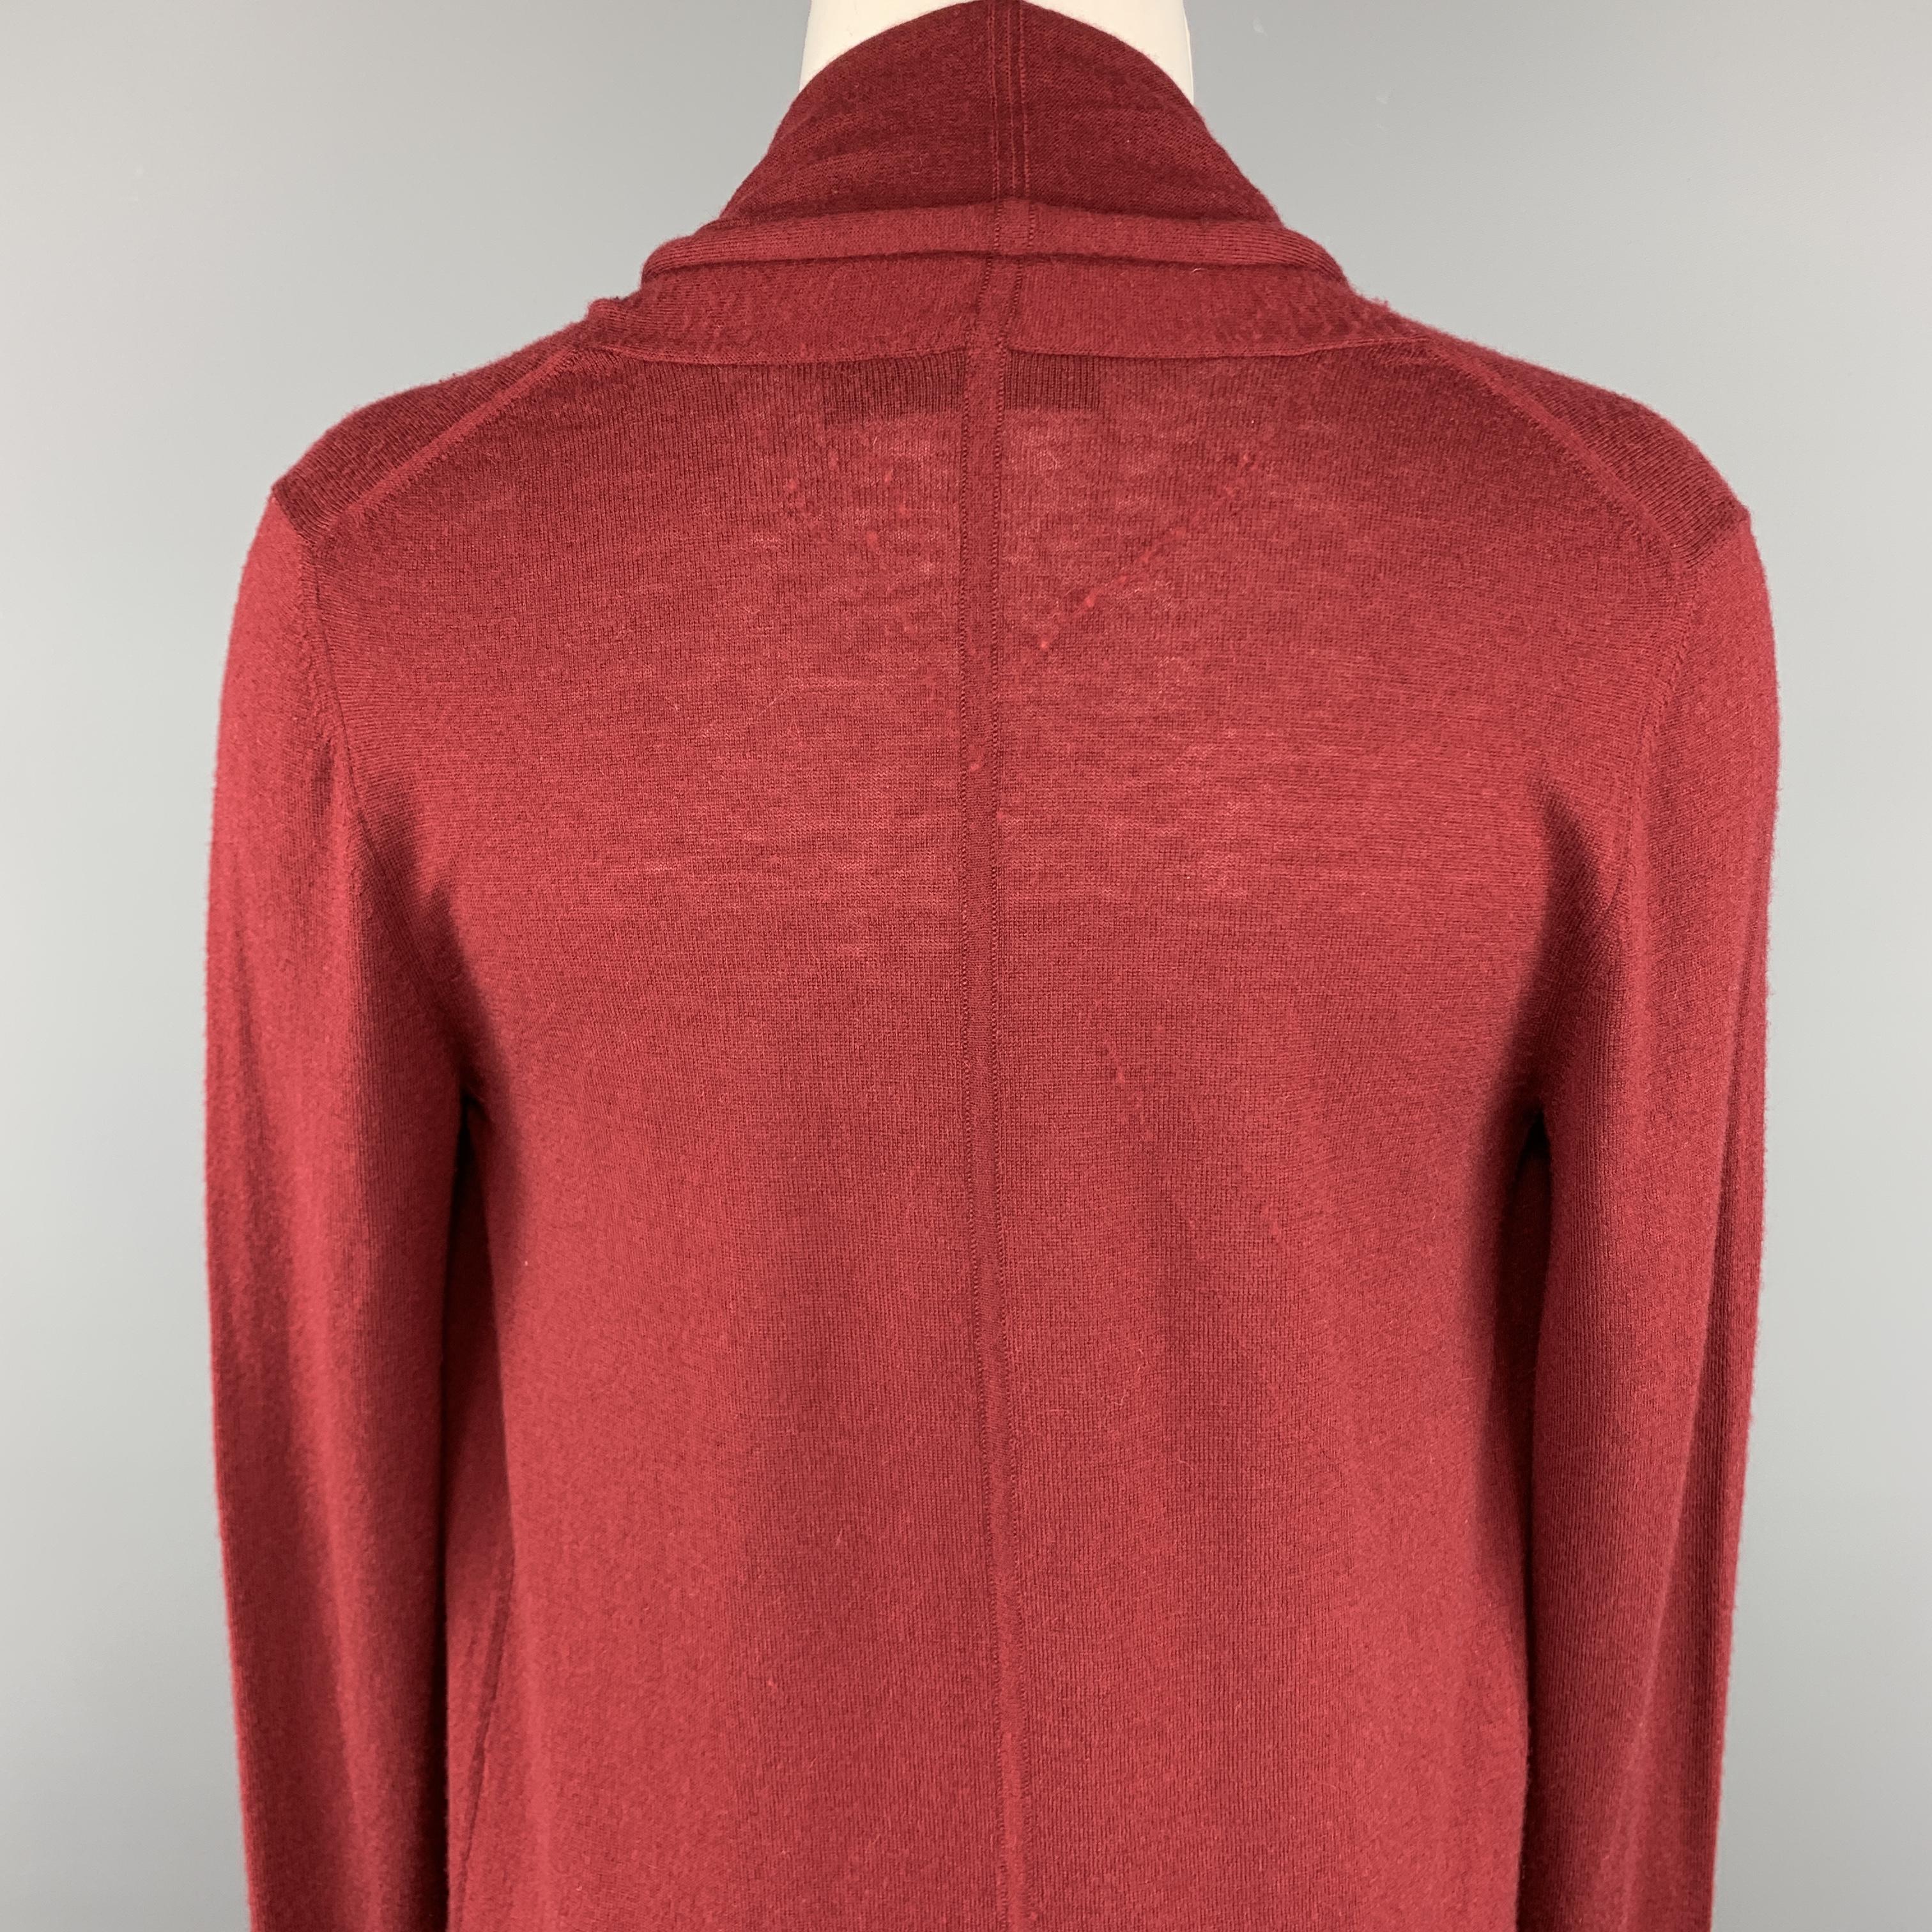 DONNA KARAN Size S Burgundy Cashmere Asymmetrical Cardigan Sweater 1